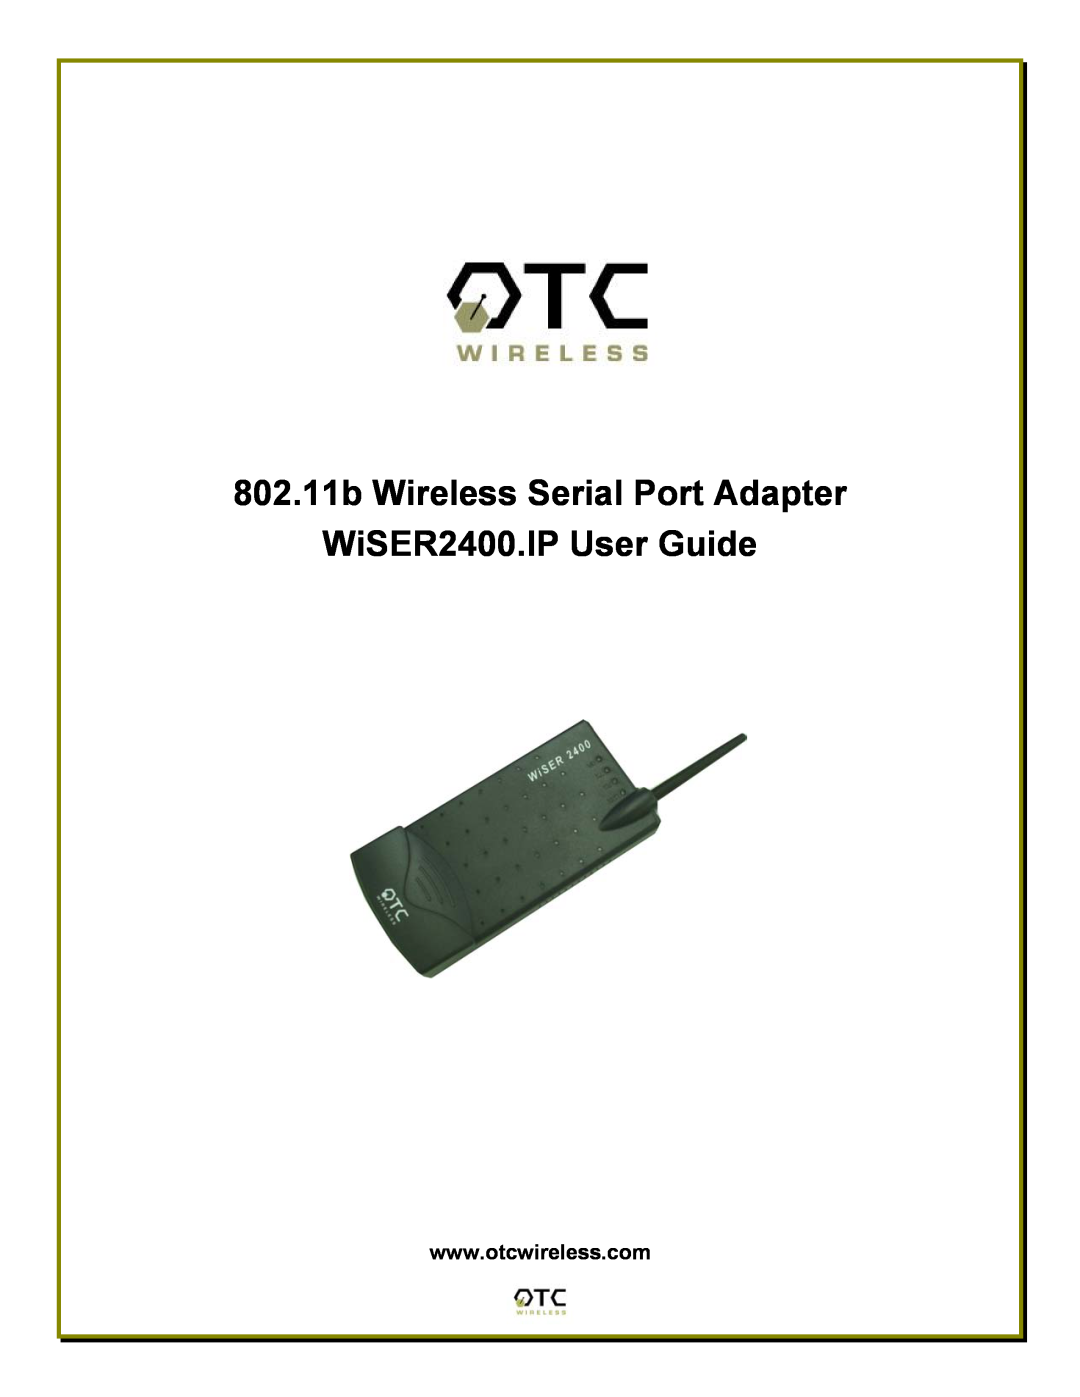 OTC Wireless manual 802.11b Wireless Serial Port Adapter, WiSER2400.IP User Guide 